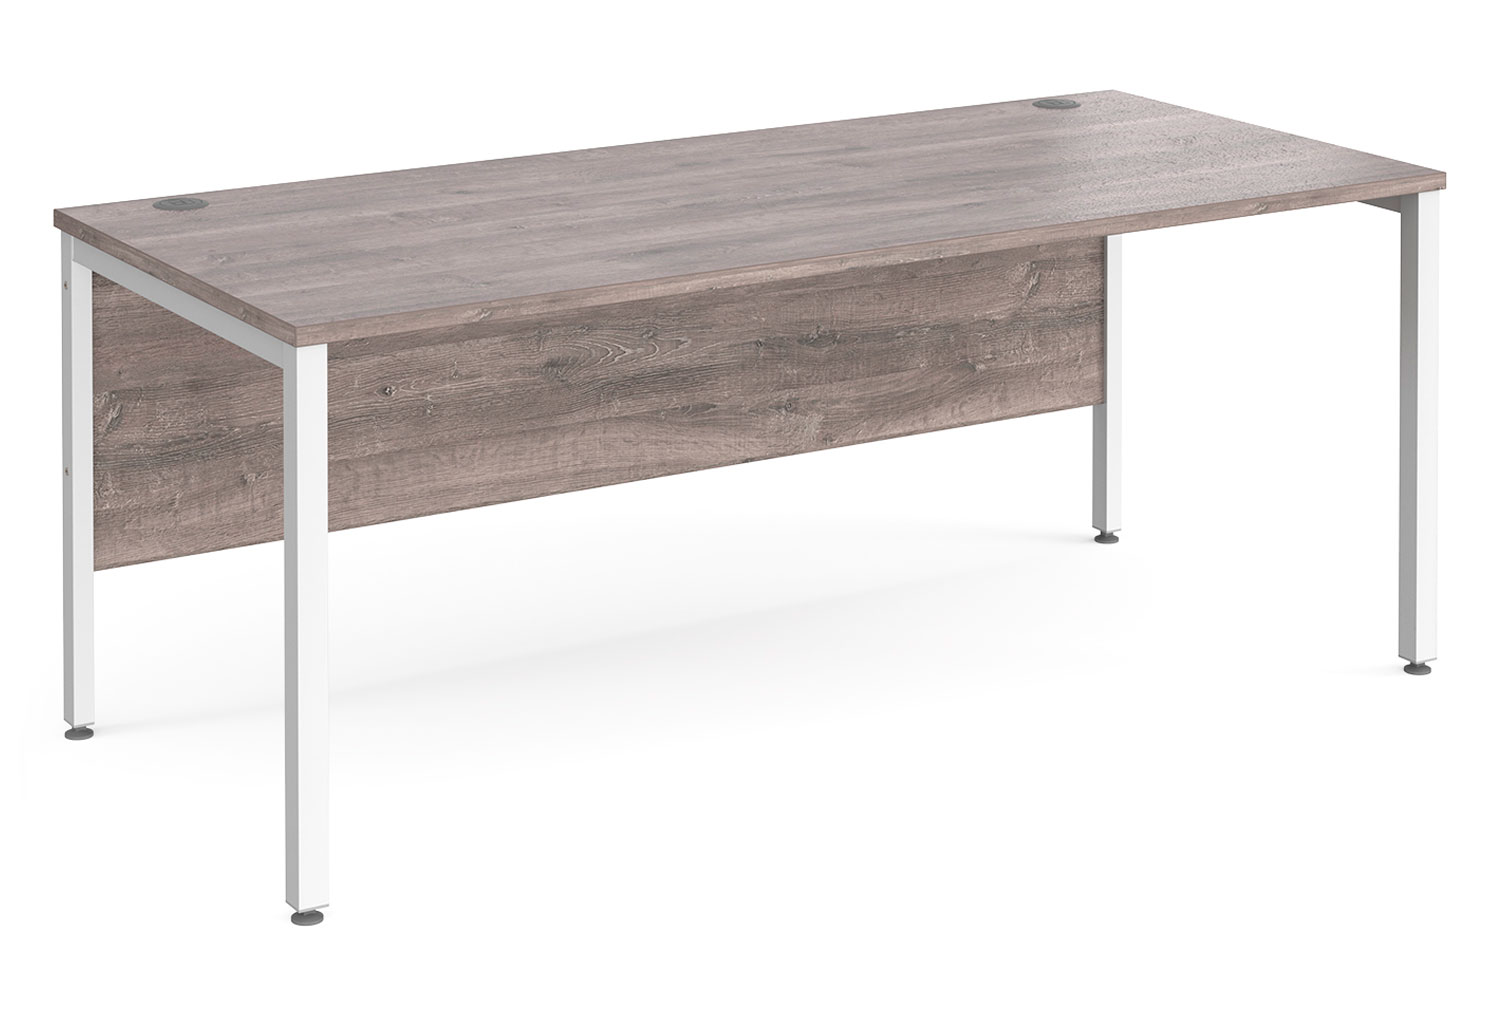 Tully Bench Rectangular Office Desk 180wx80dx73h (cm), Grey Oak